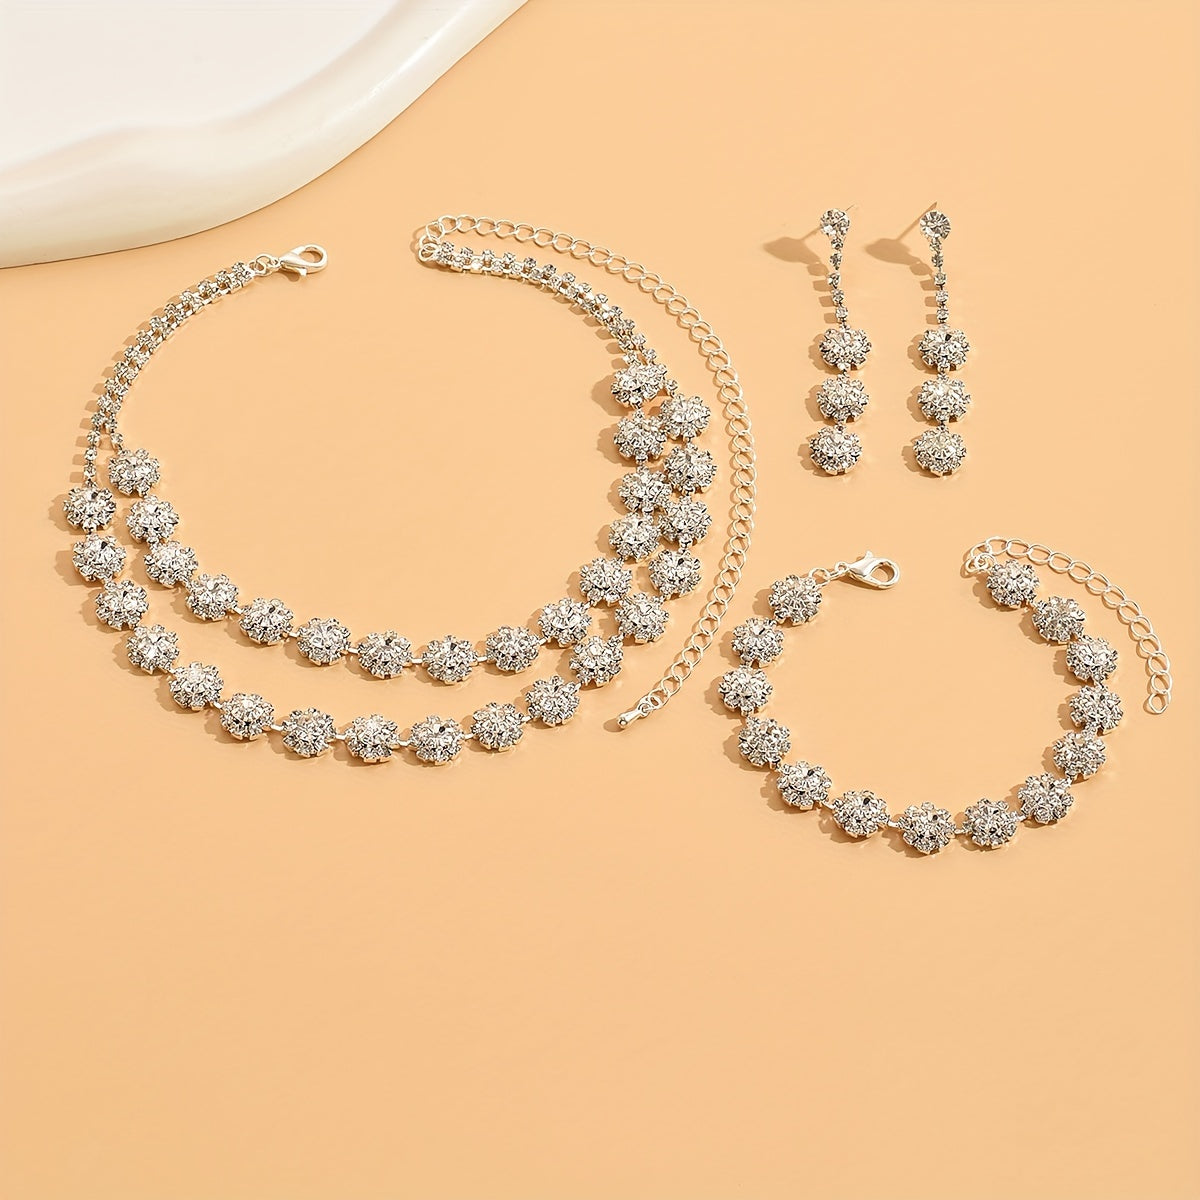 2 Pcs / 3 Pcs Jewelry Set Flower Shape Synthetic Gems Two Layers Choker Necklace & Dangle Earrings / Chain Bracelet For Women & Girls Photo Props